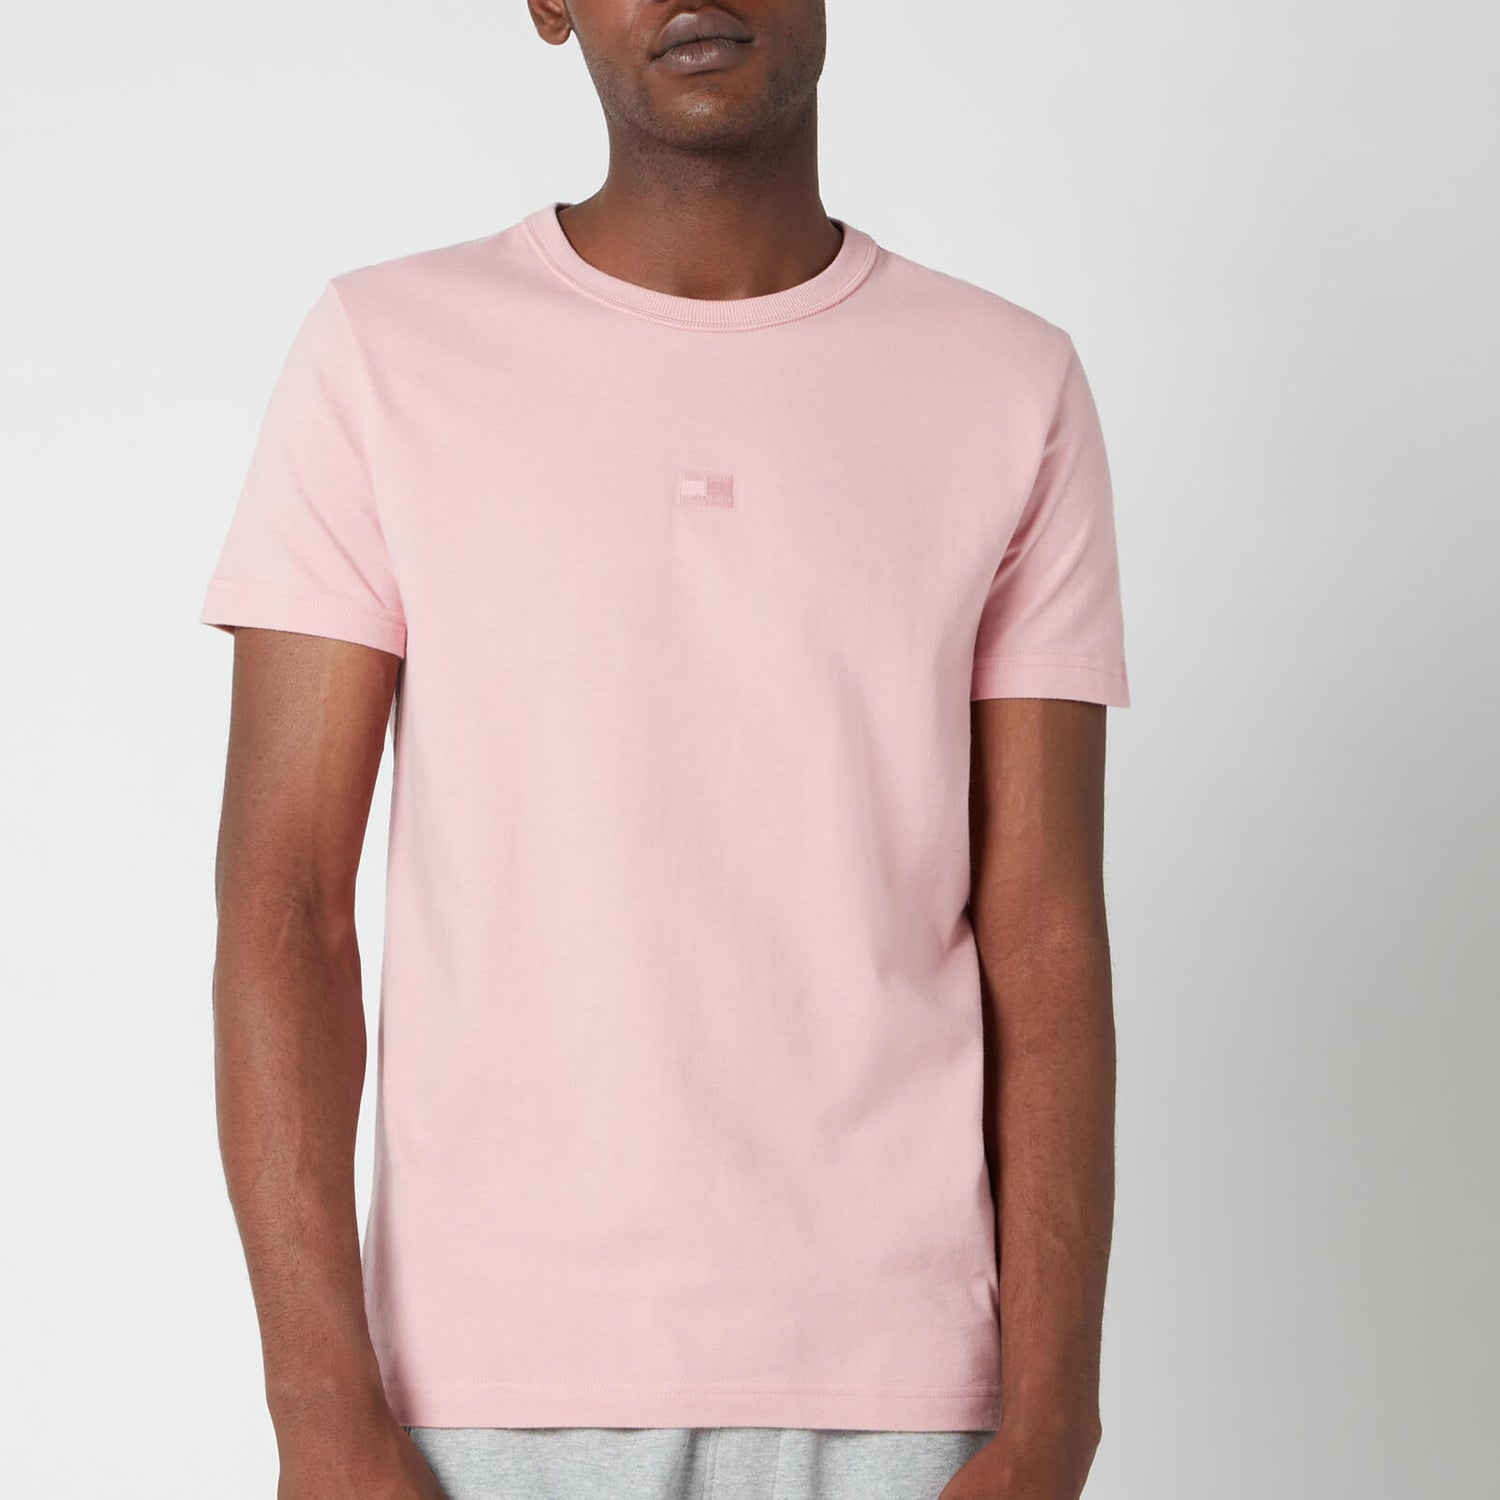 Tommy Hilfiger Men's Recycled Cotton Crewneck T-Shirt - Glacier Pink